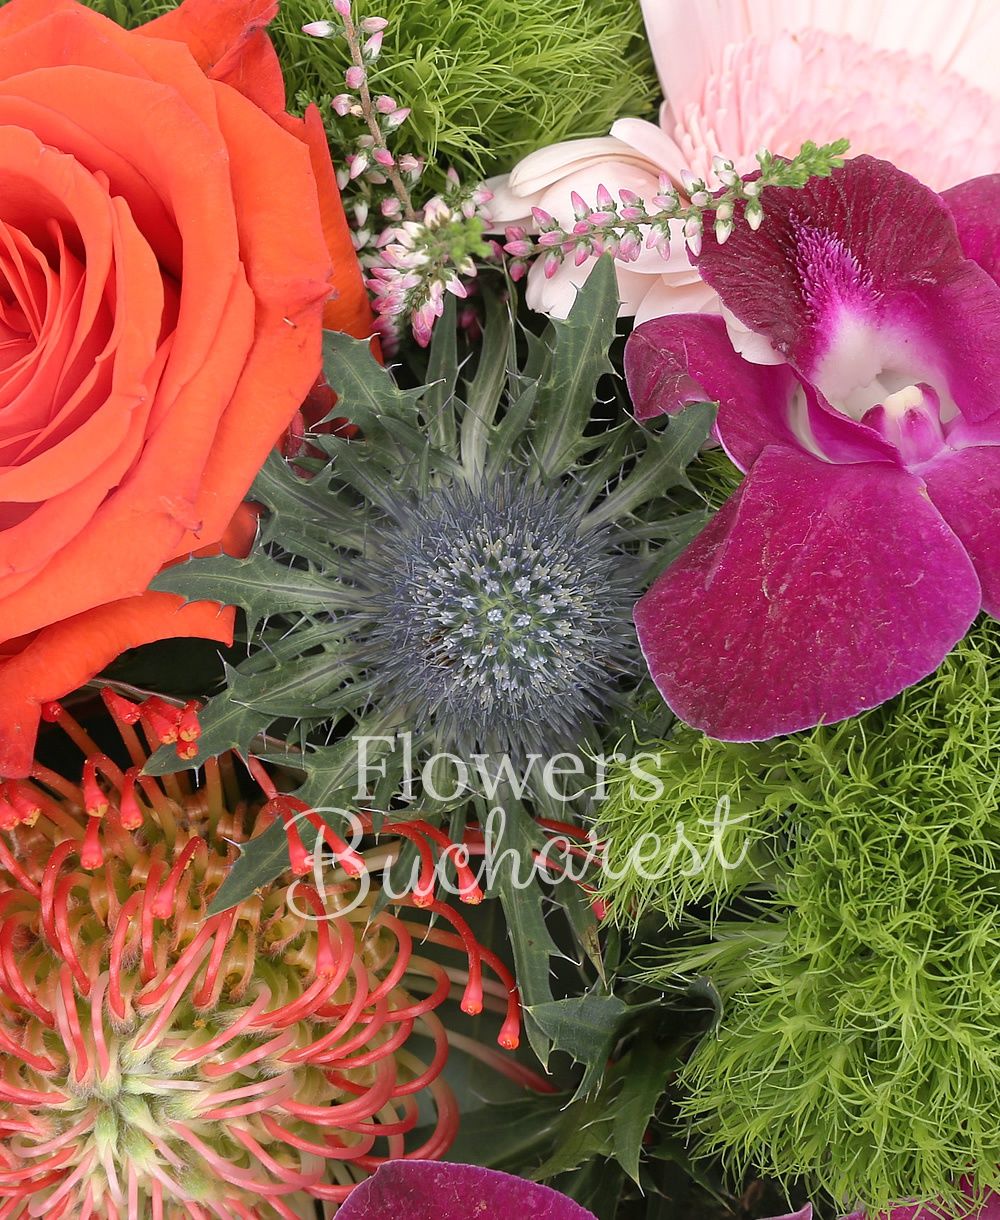 1 orange rose, protea, 1 eryngium, 1 dendrobium orchid, 1 pink gerbera, 2 green carnations, greenery